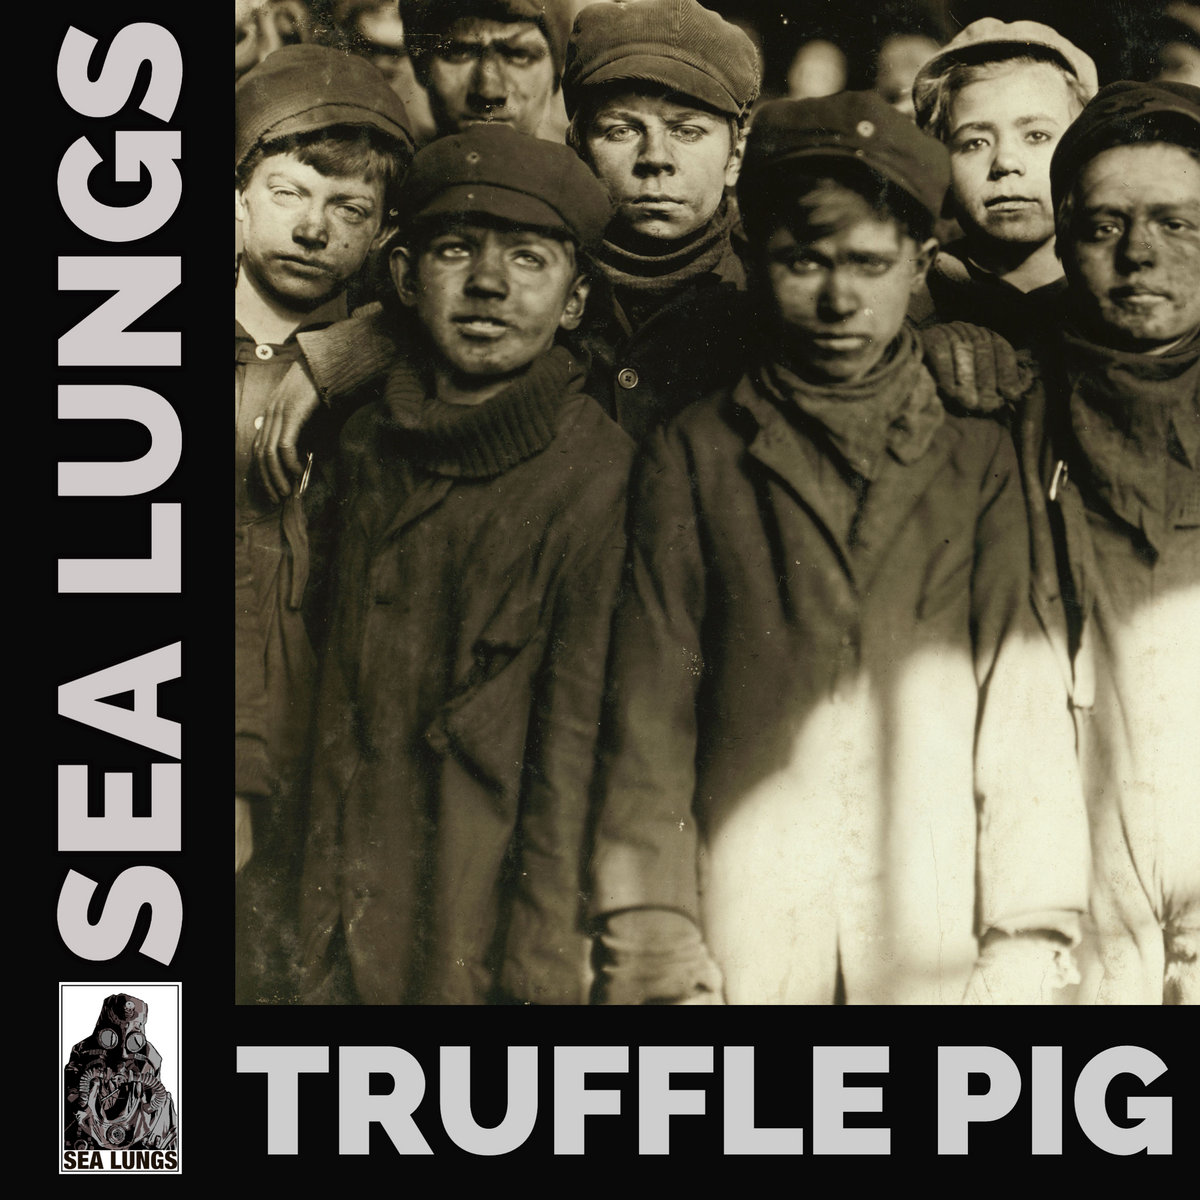 Sea Lungs – “Truffle Pig”